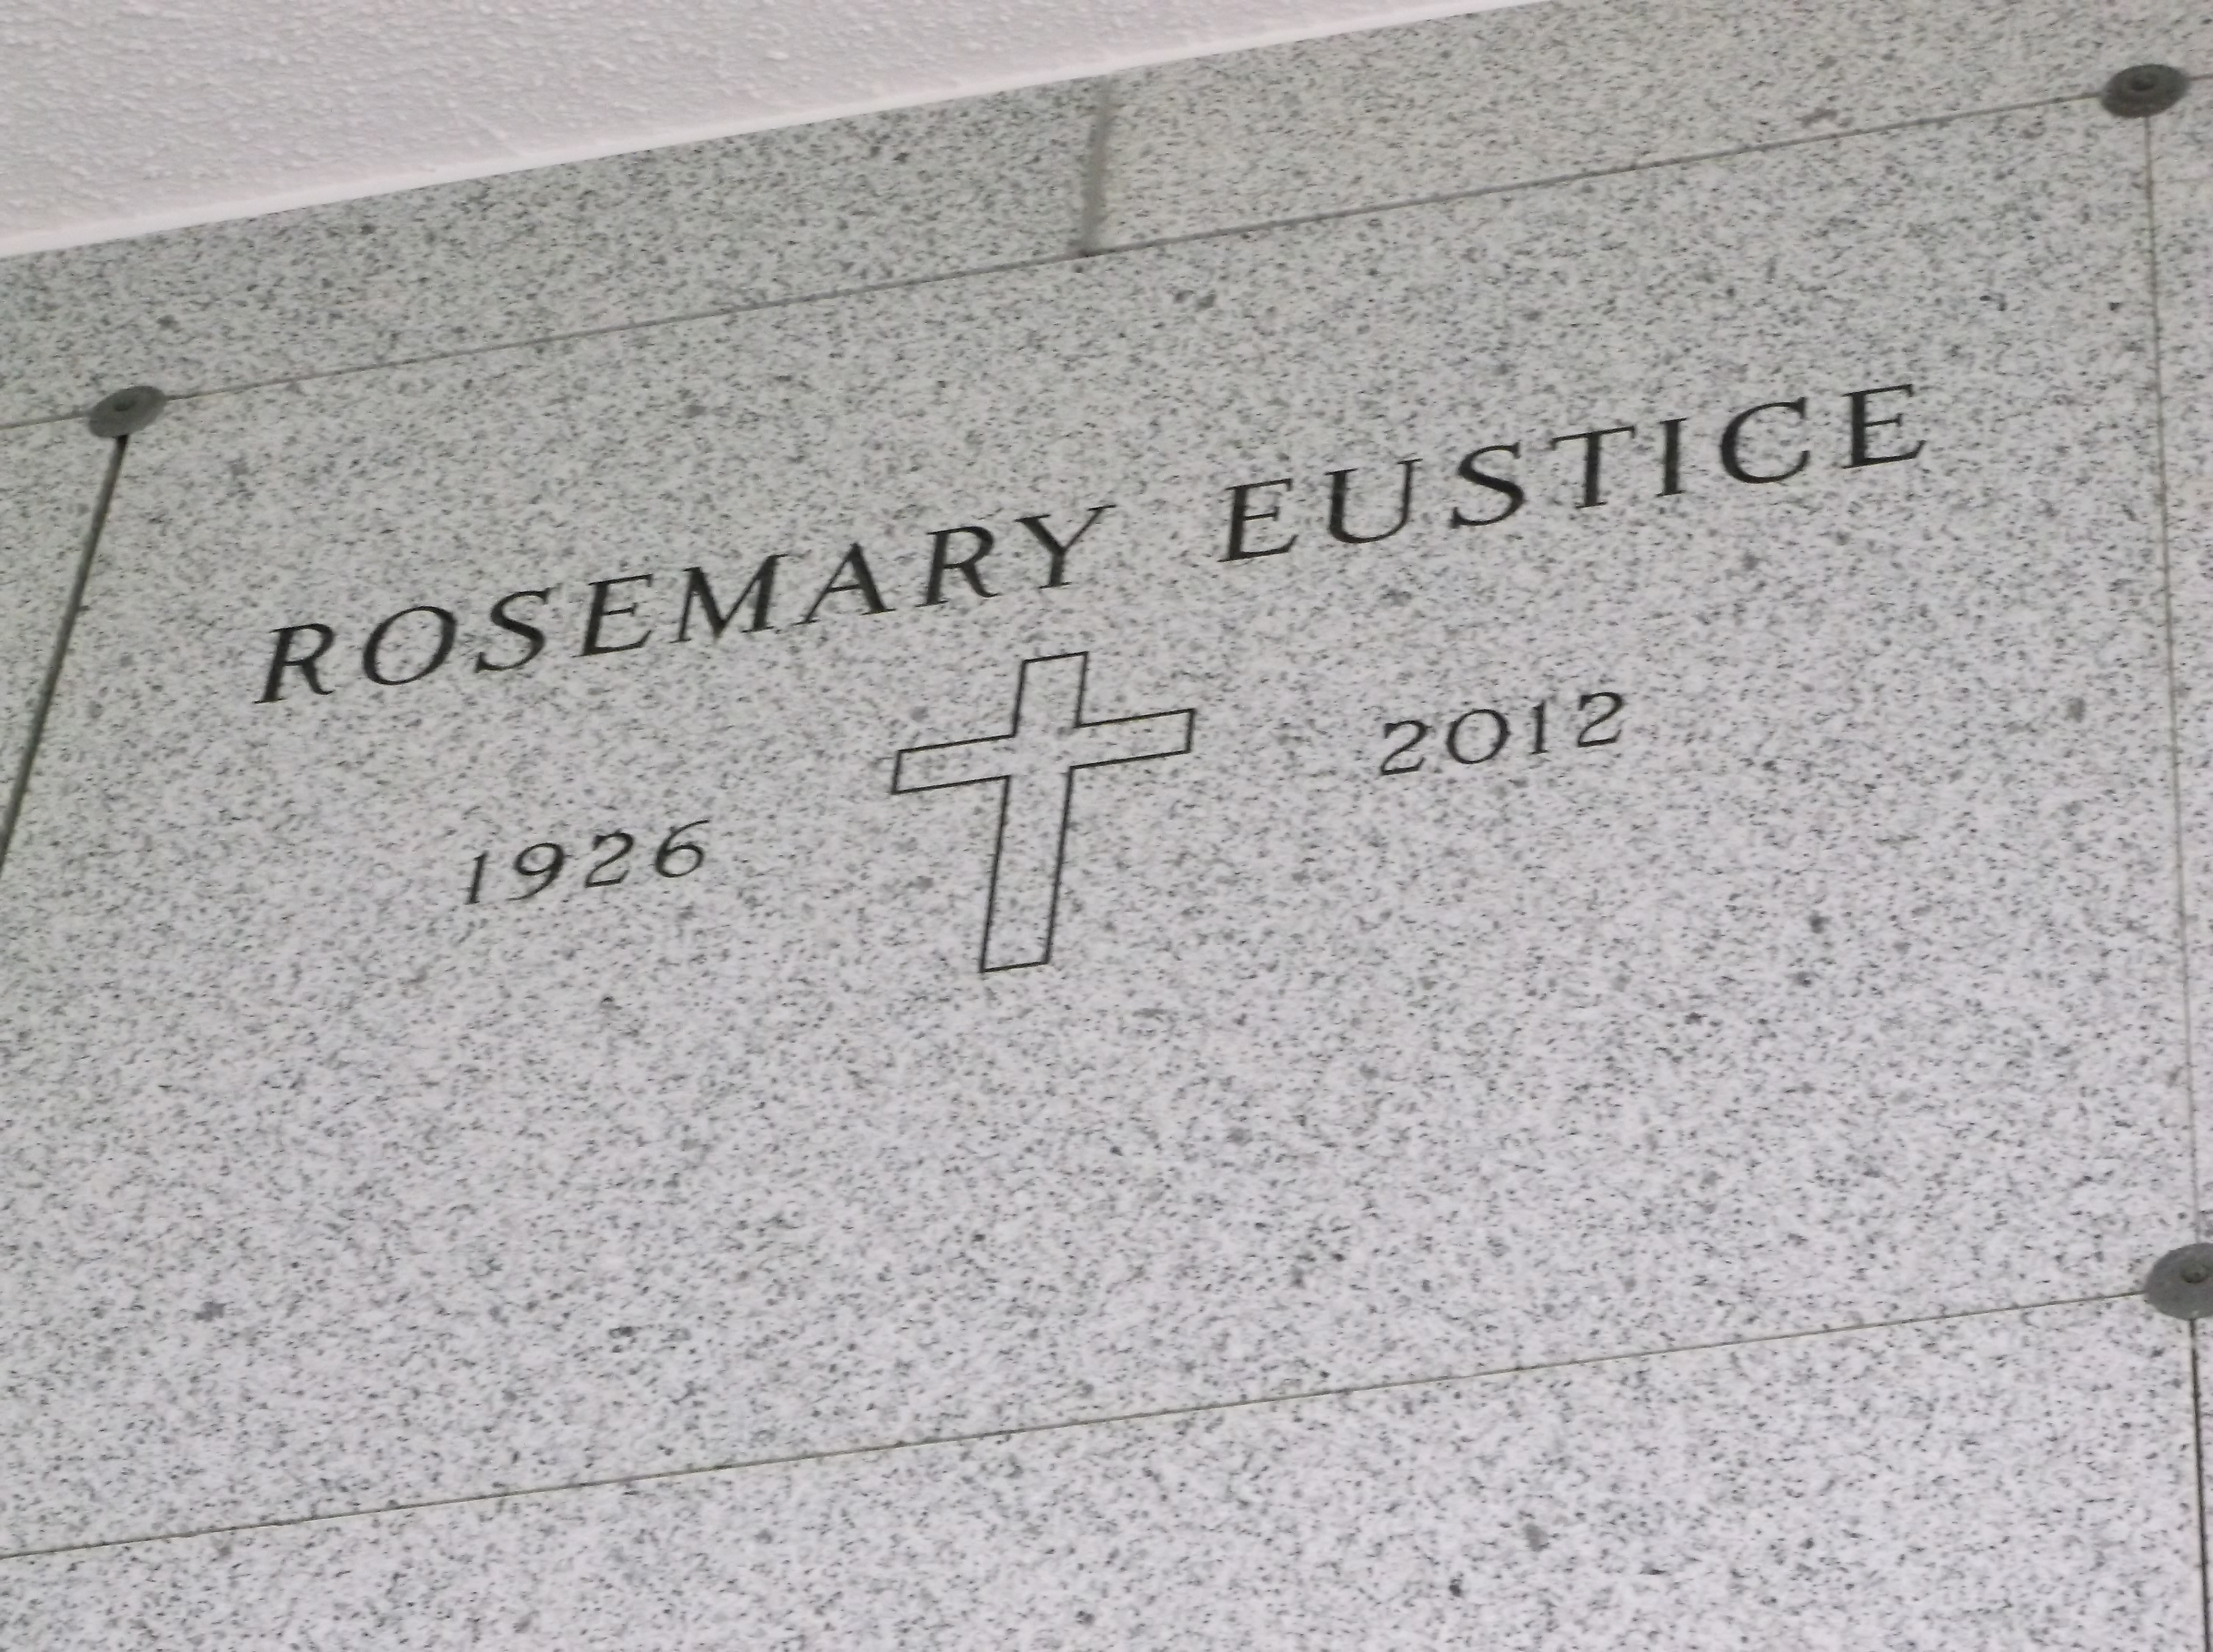 Rosemary Eustice